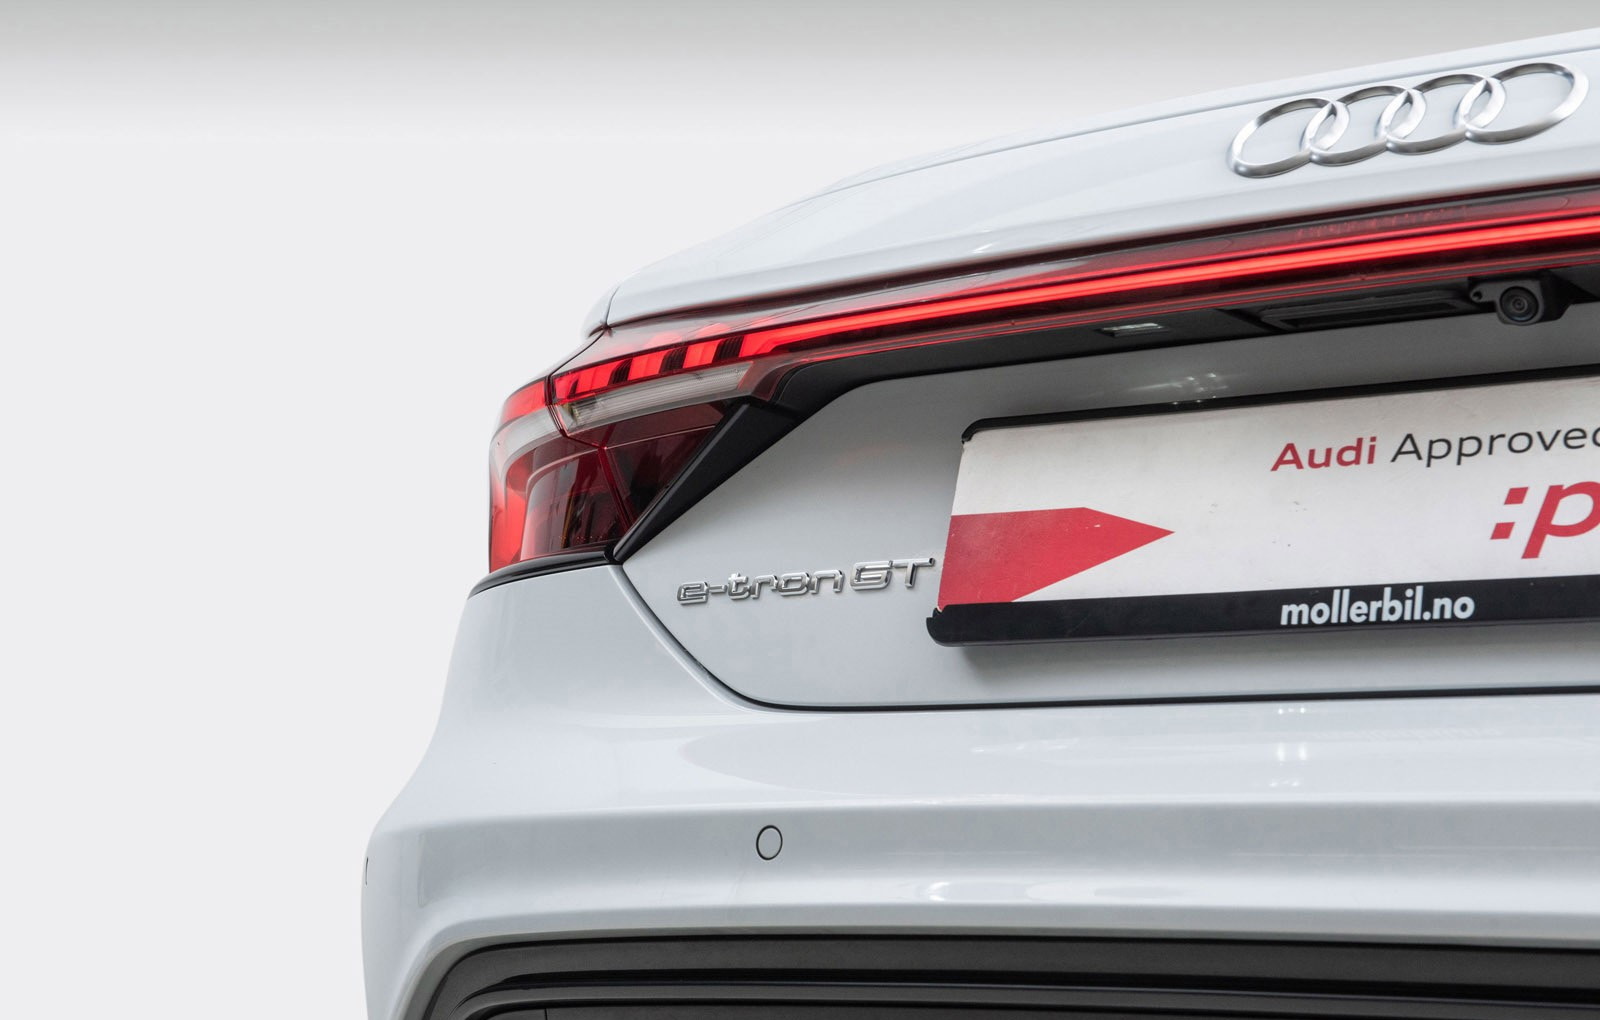 Location of rear parking sensors on Audi e-tron GT